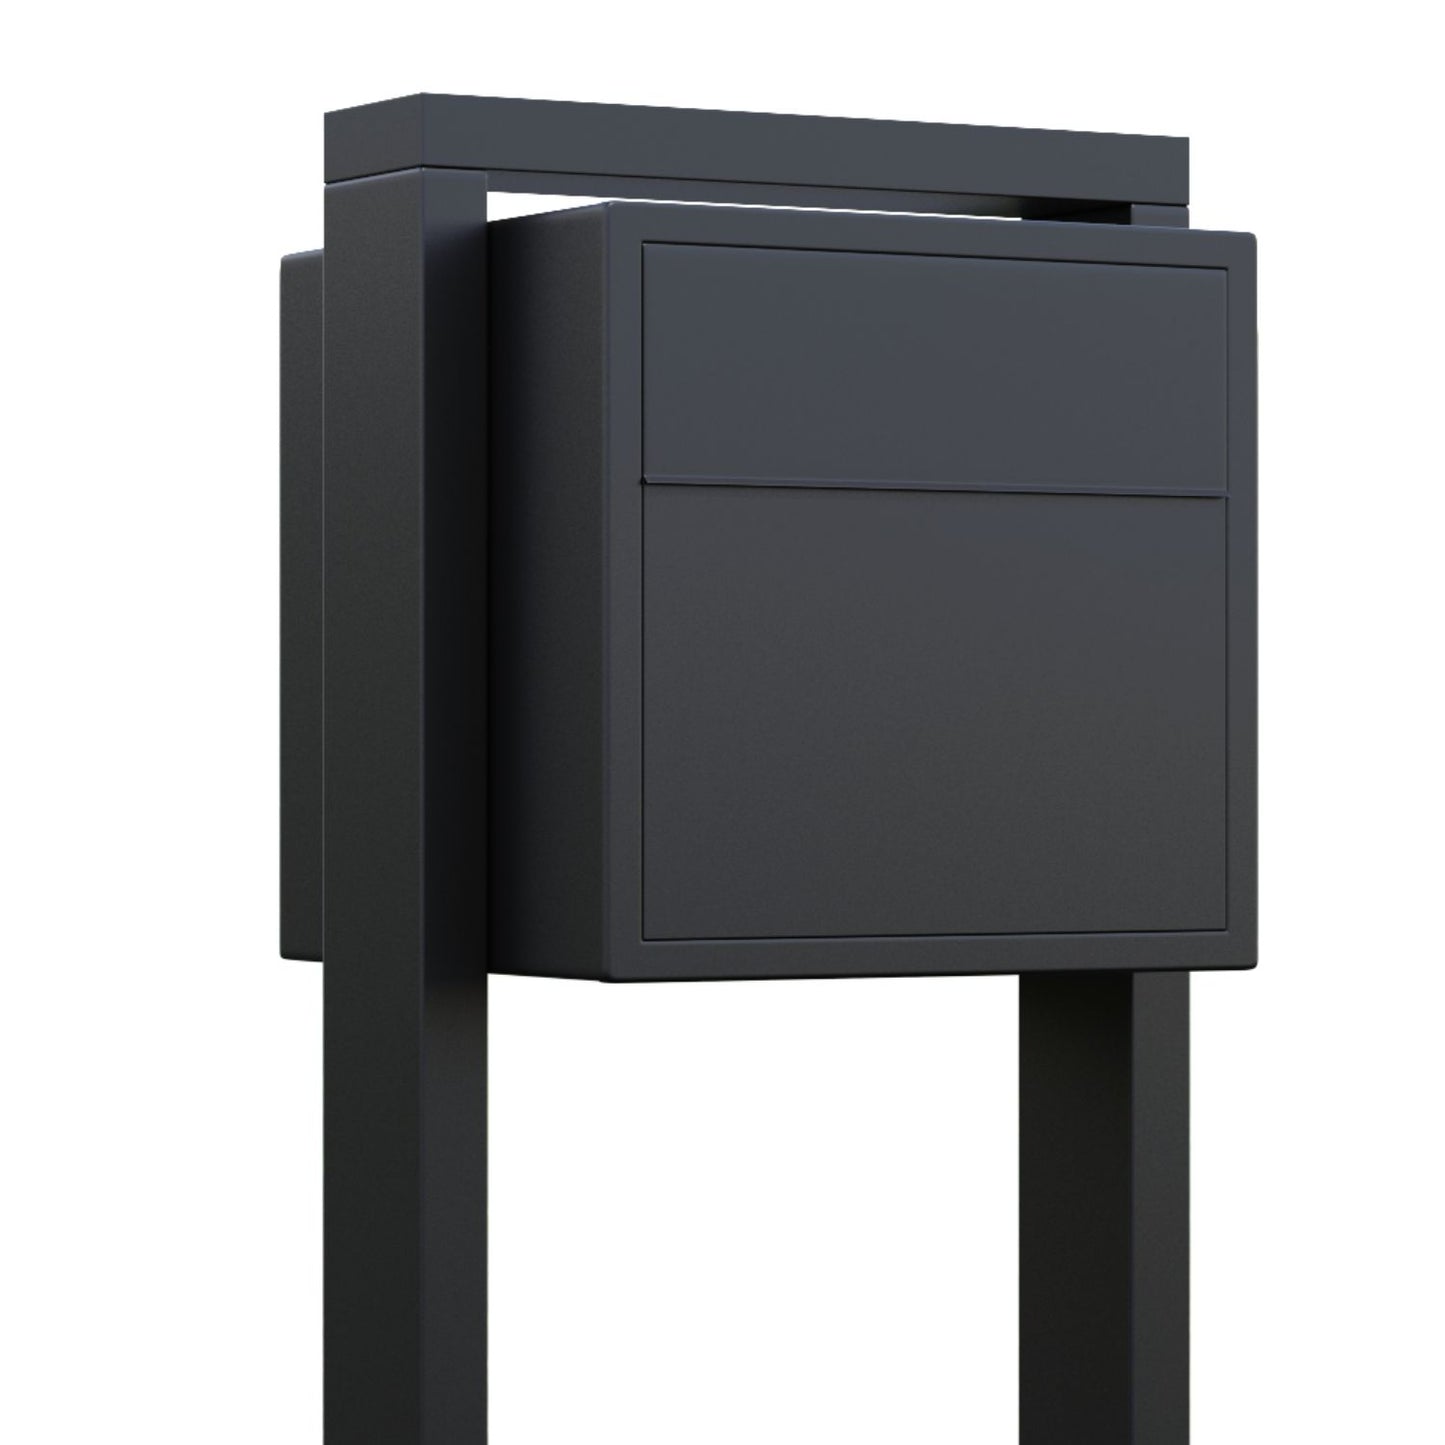 SOPRANO by Bravios - Modern post-mounted anthracite mailbox